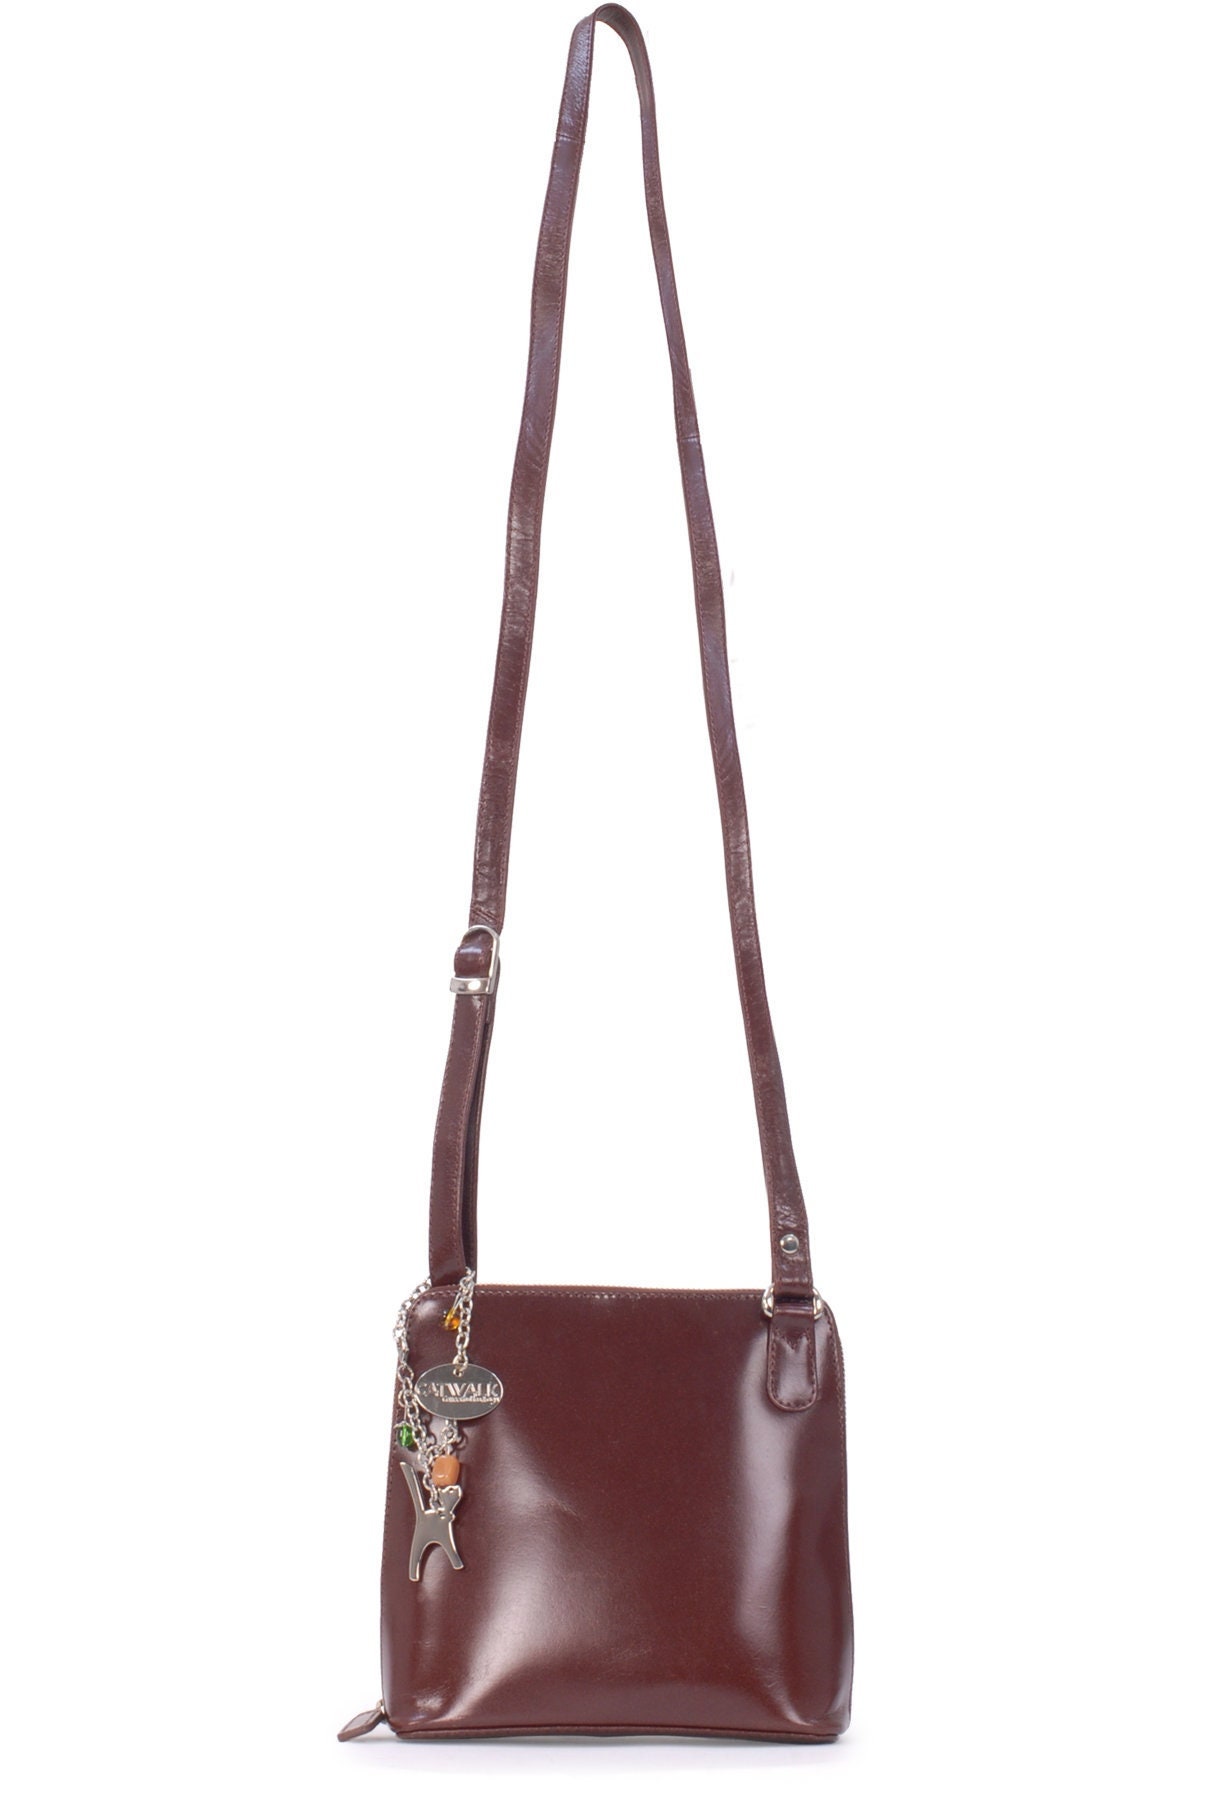 Catwalk Collection Handbags - Women's Shoulder Bag / Flapover Bag / Crossbody Bag - Fits iPad or Tablet - Vintage Leather - Diana- Grey